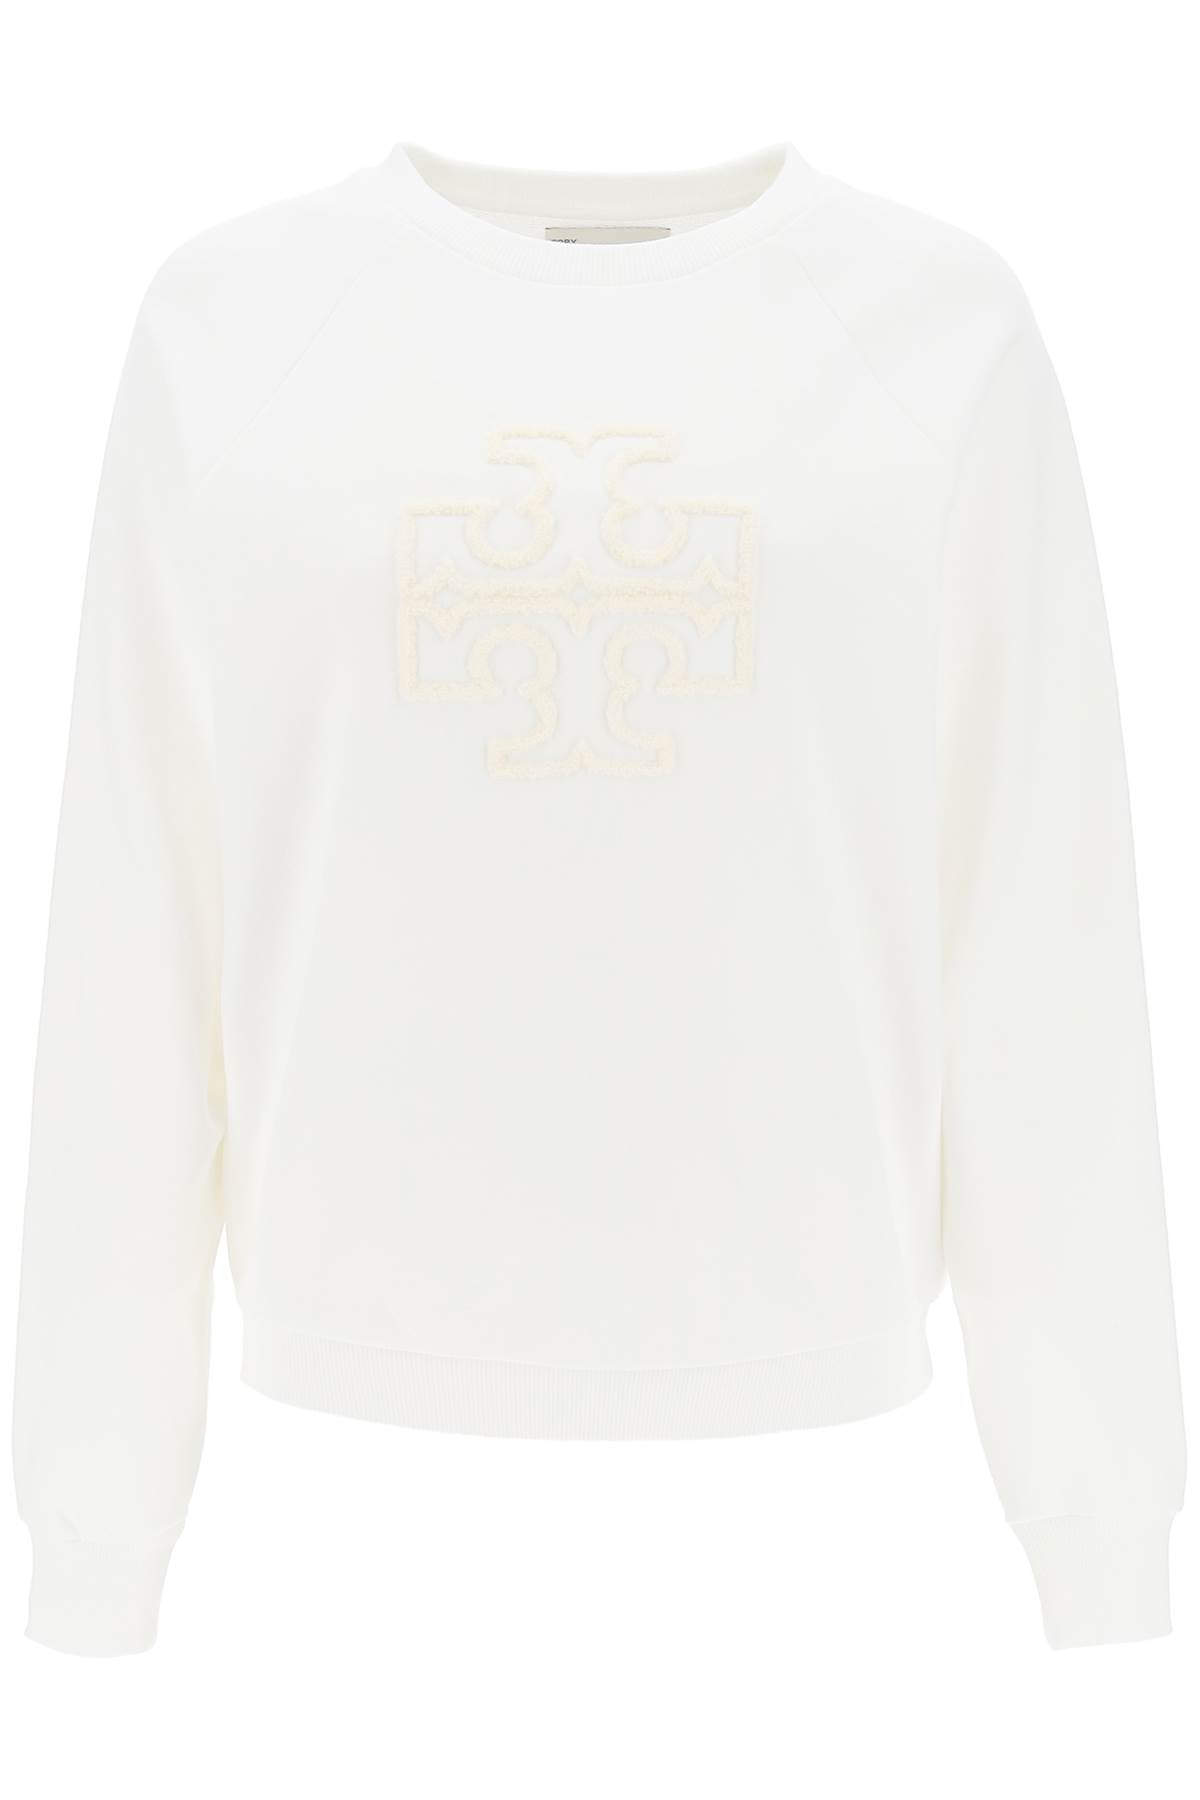 Tory burch crew-neck sweatshirt with t logo-0